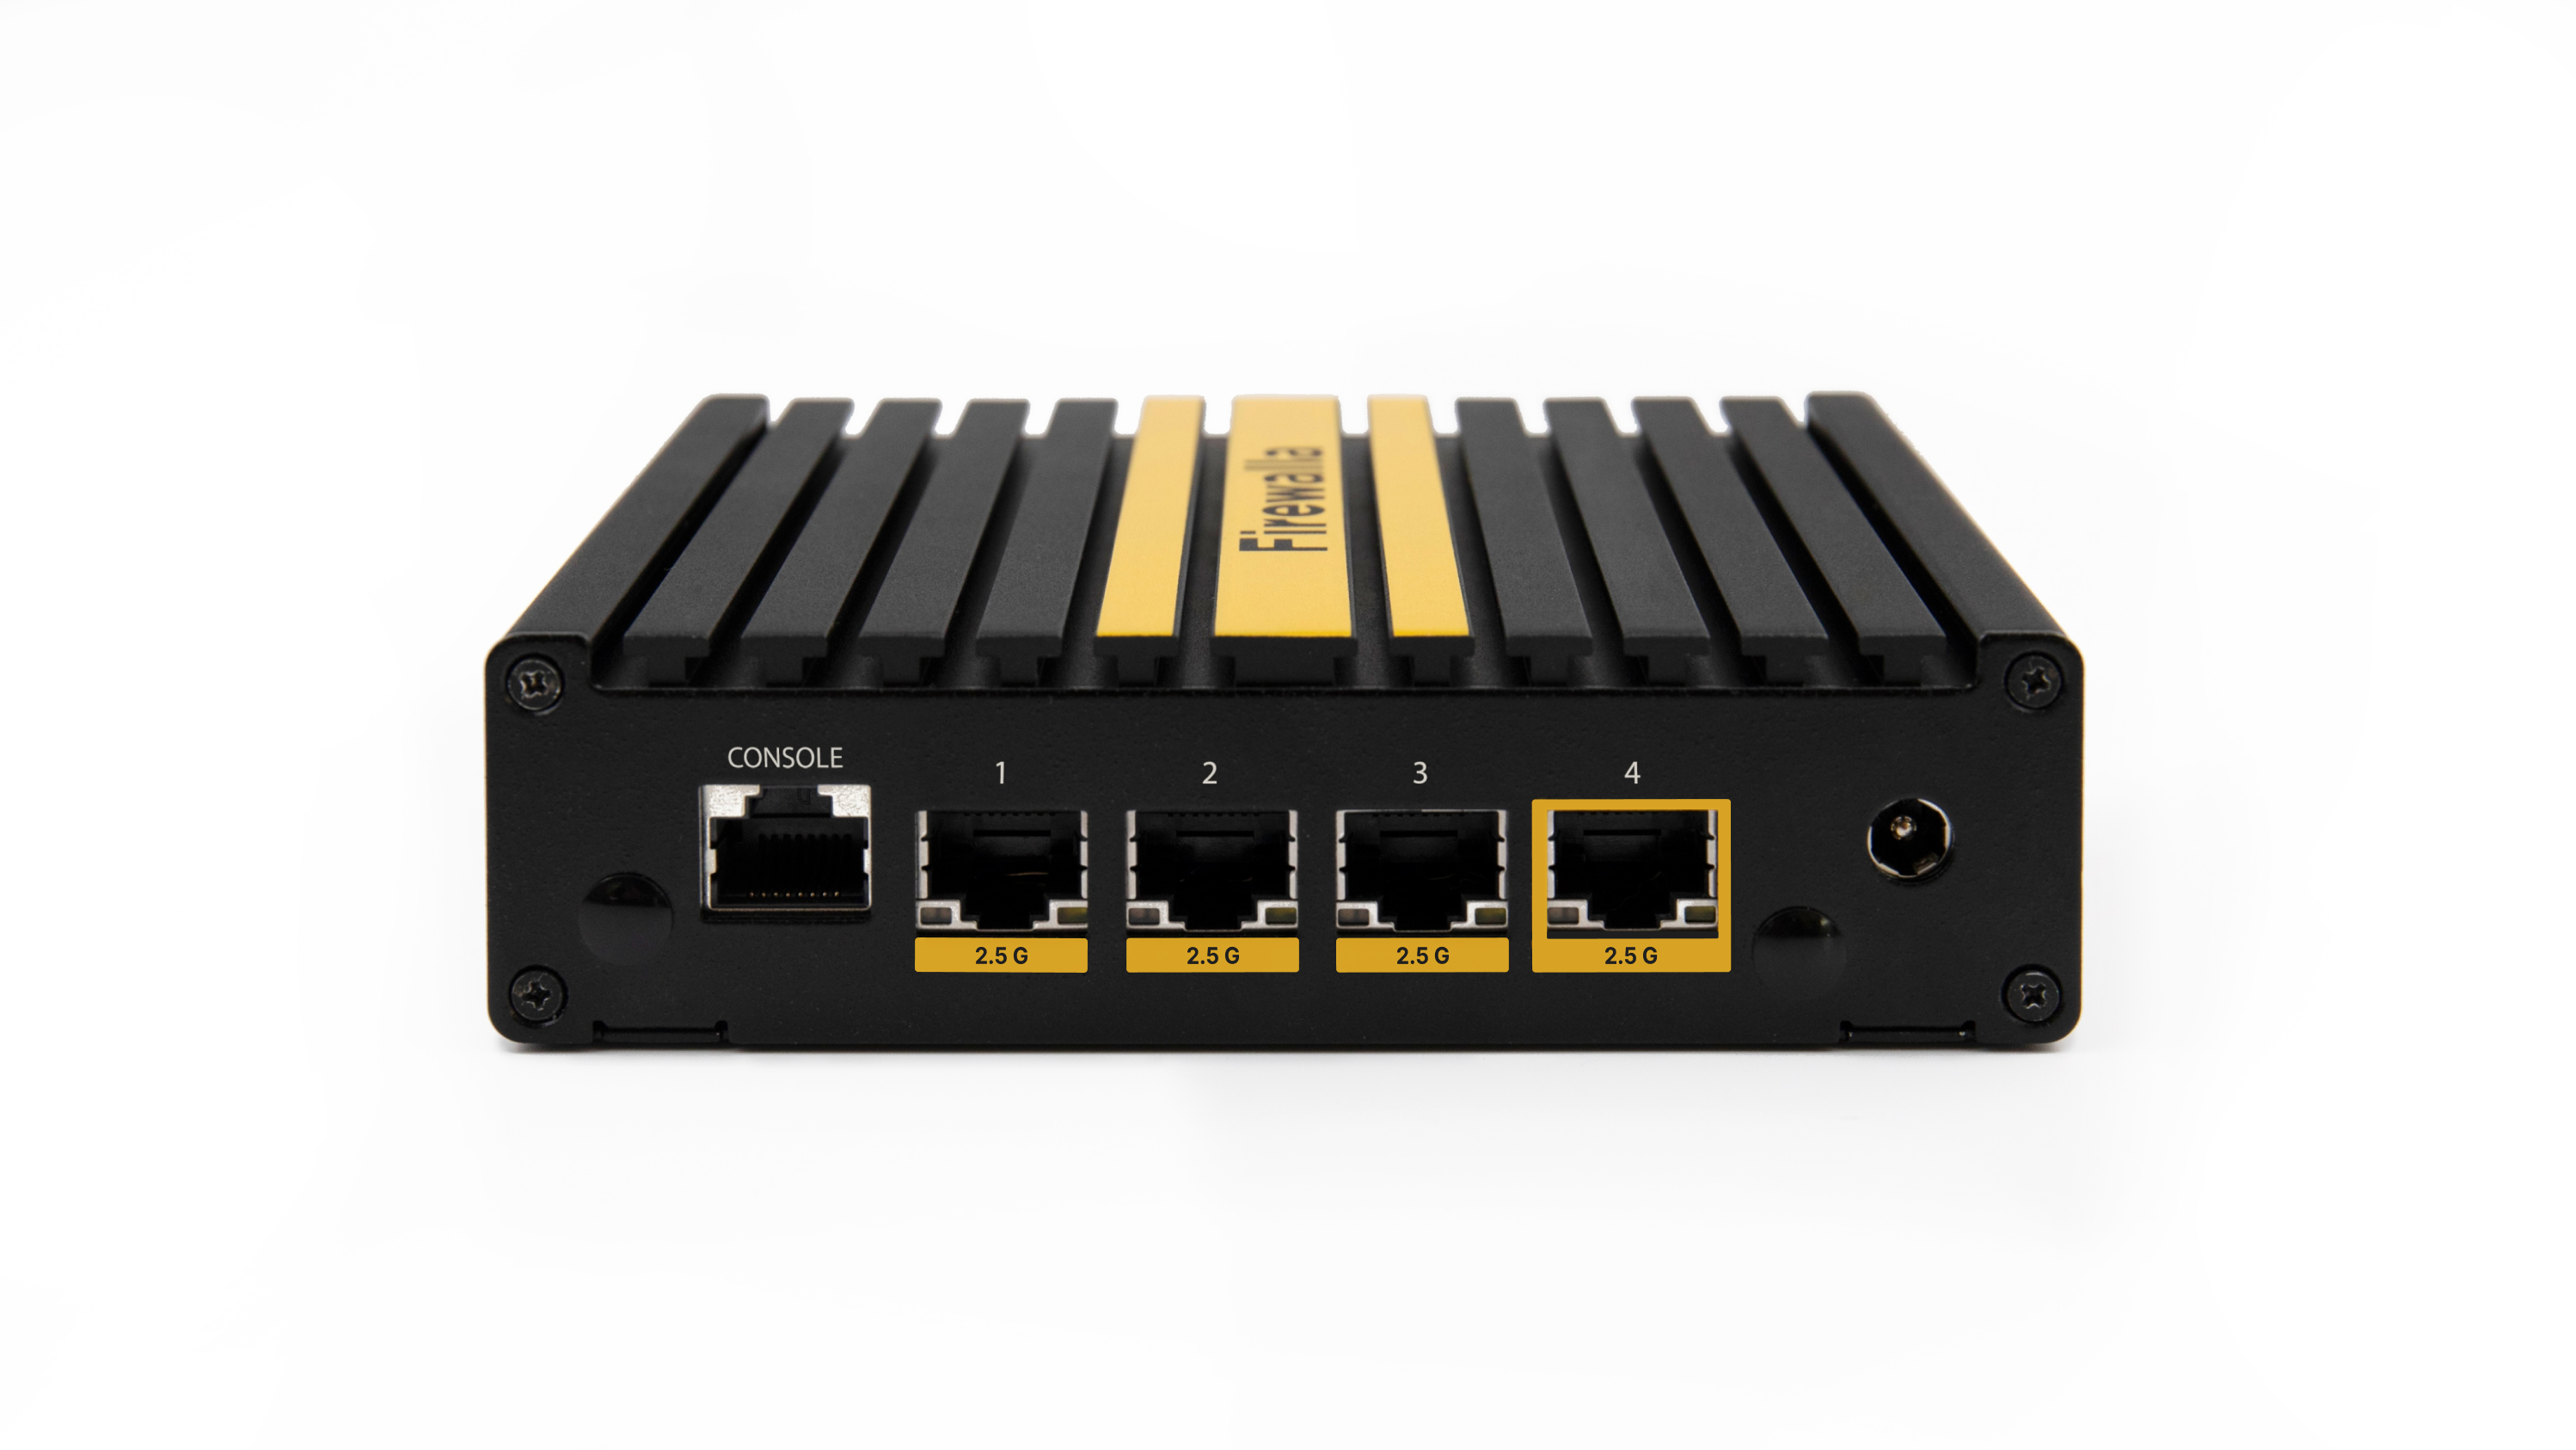 Firewalla launches the Gold Plus, its new 2.5 Gigabit firewall